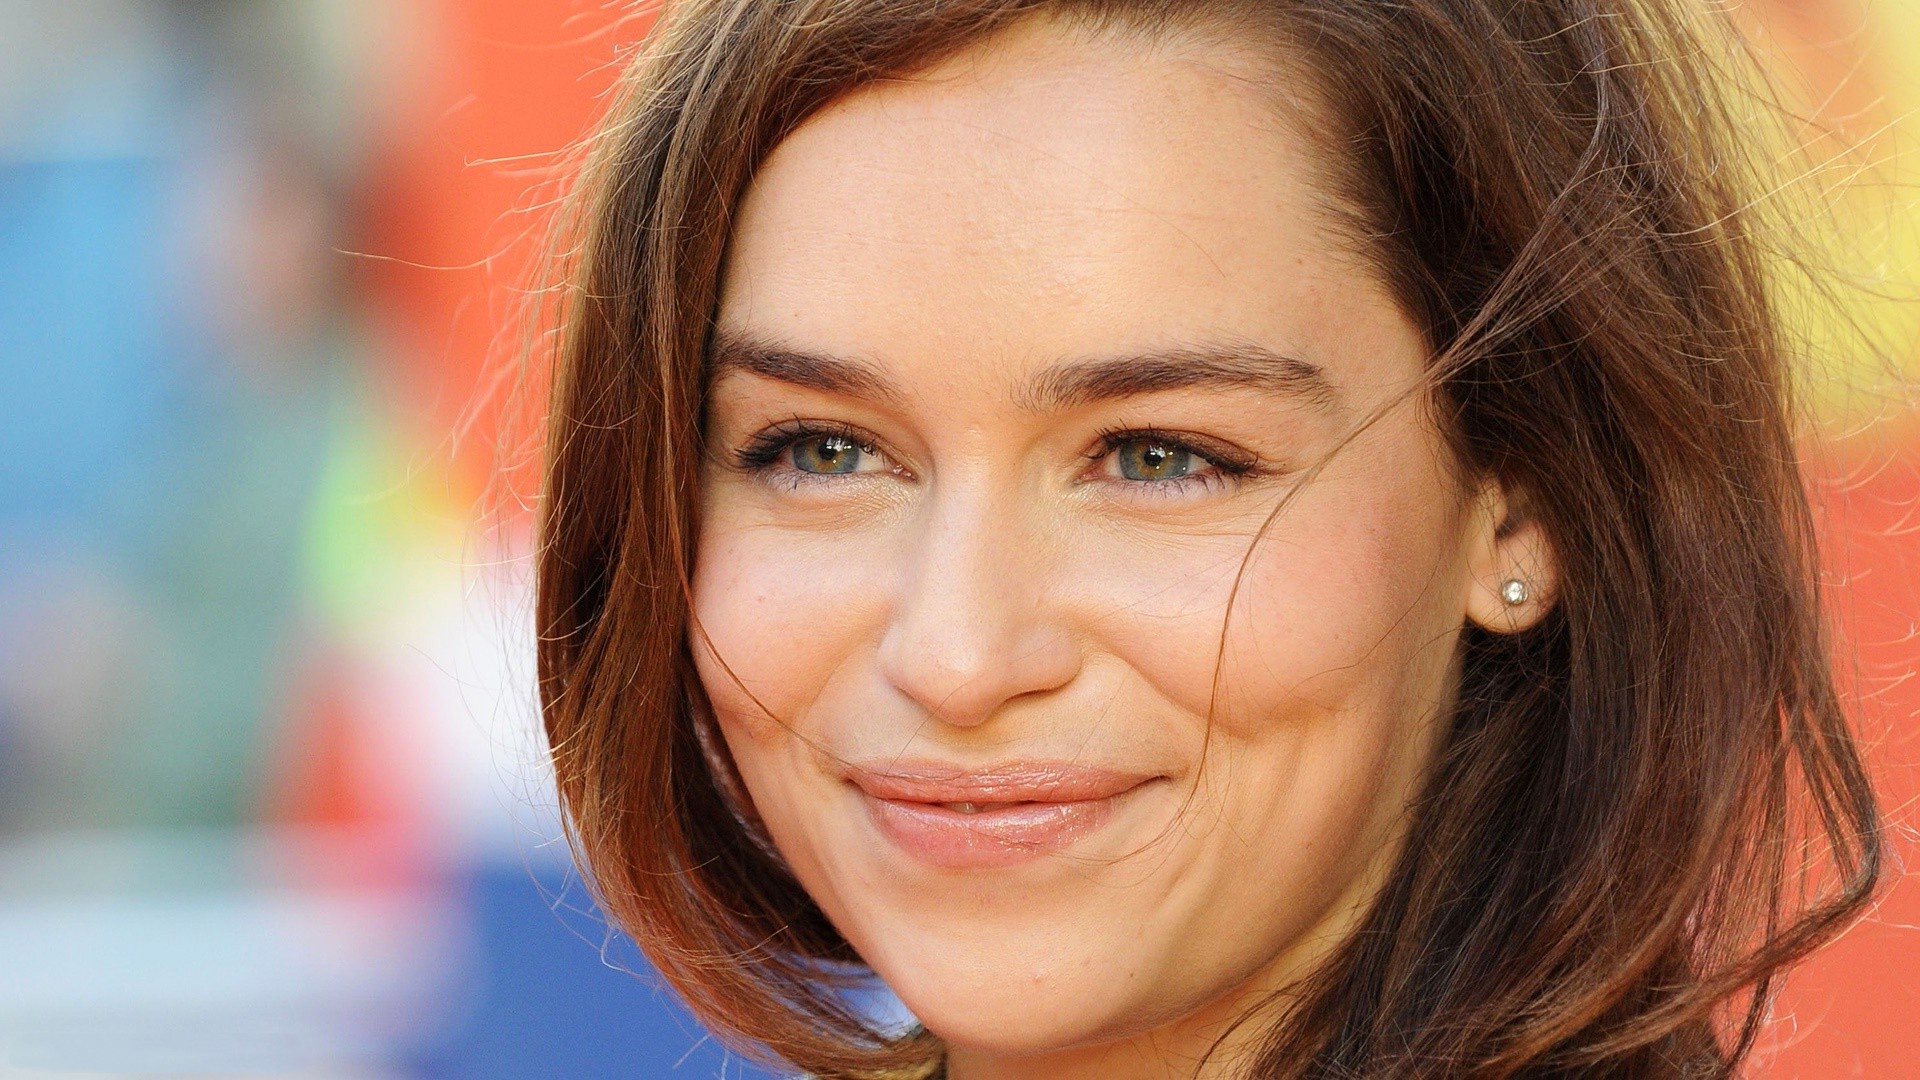 Wallpaper Smiling face of actress, Emilia Clarke